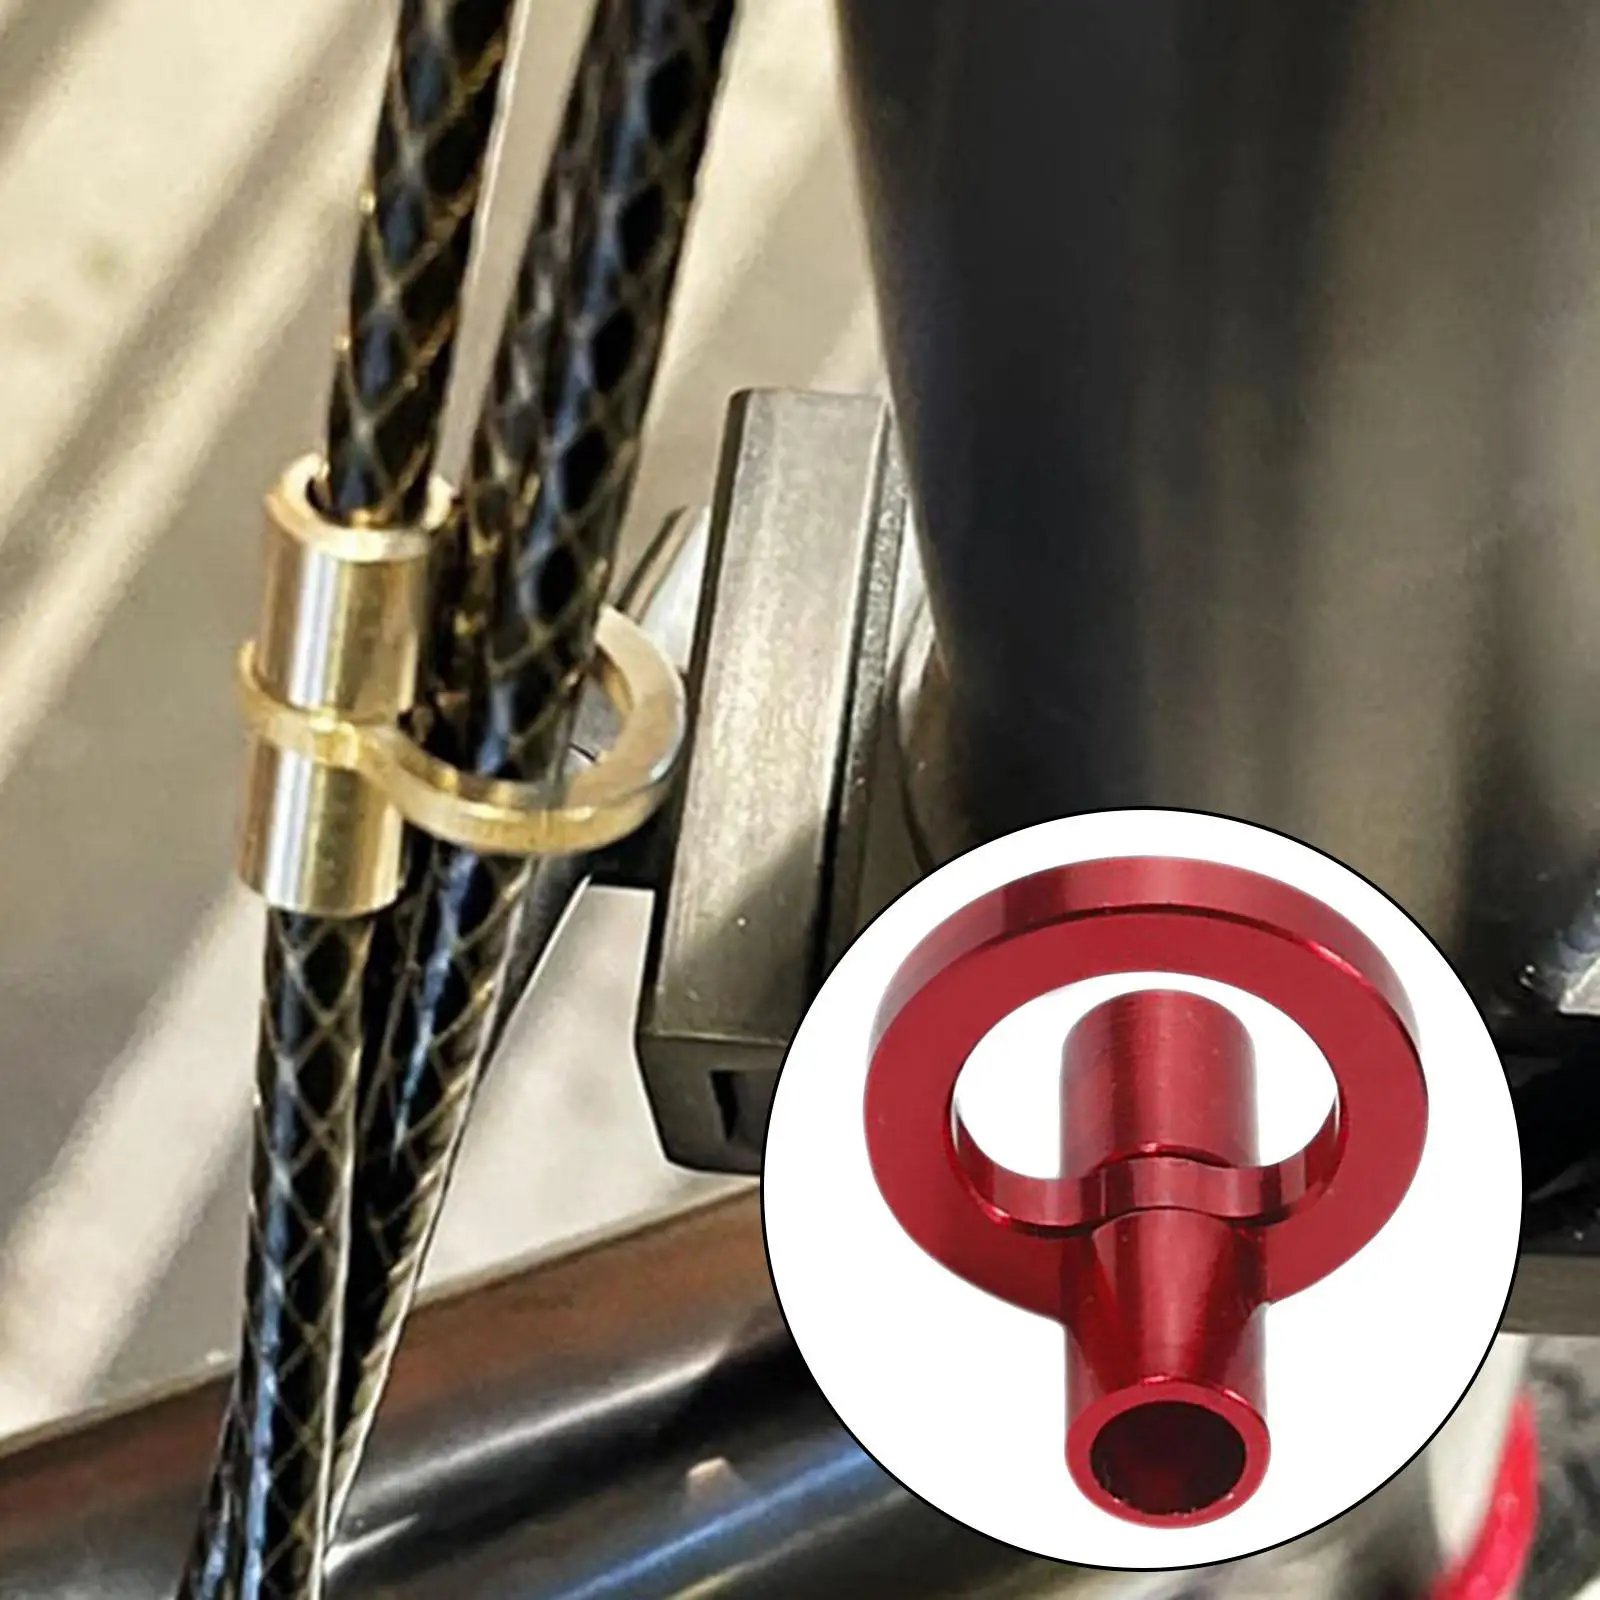 Brake  Clip Fixed Clip Mountain Bike Wire Holder Organizer Accessories for Bike BMX